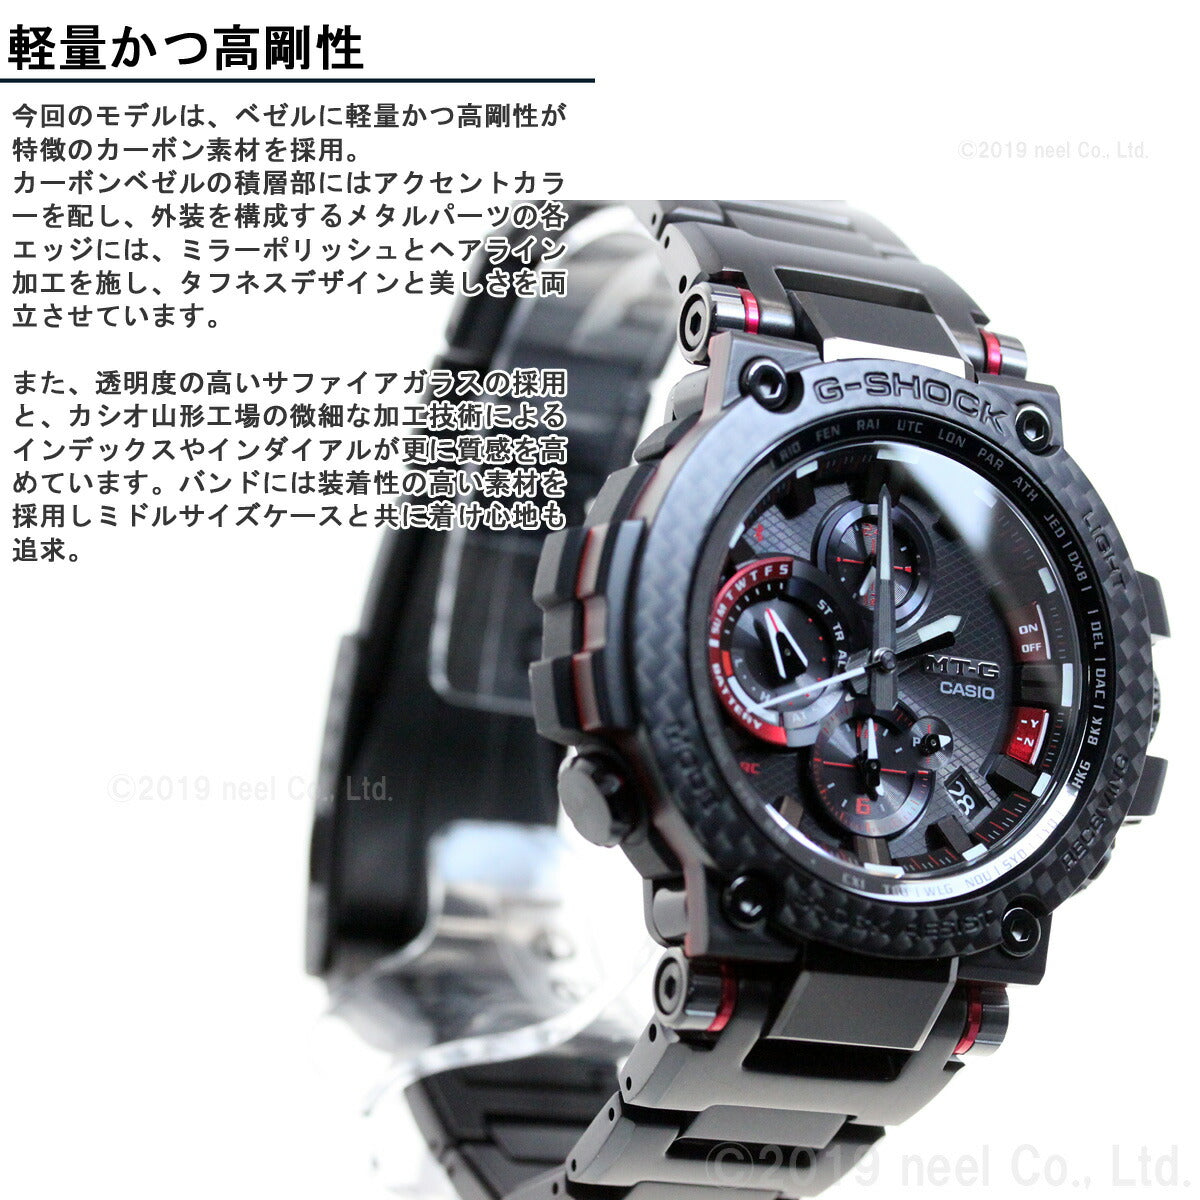 MT-G G-SHOCK 電波 ソーラー 電波時計 カシオ Gショック CASIO 腕時計 メンズ タフソーラー MTG-B1000XBD-1AJF